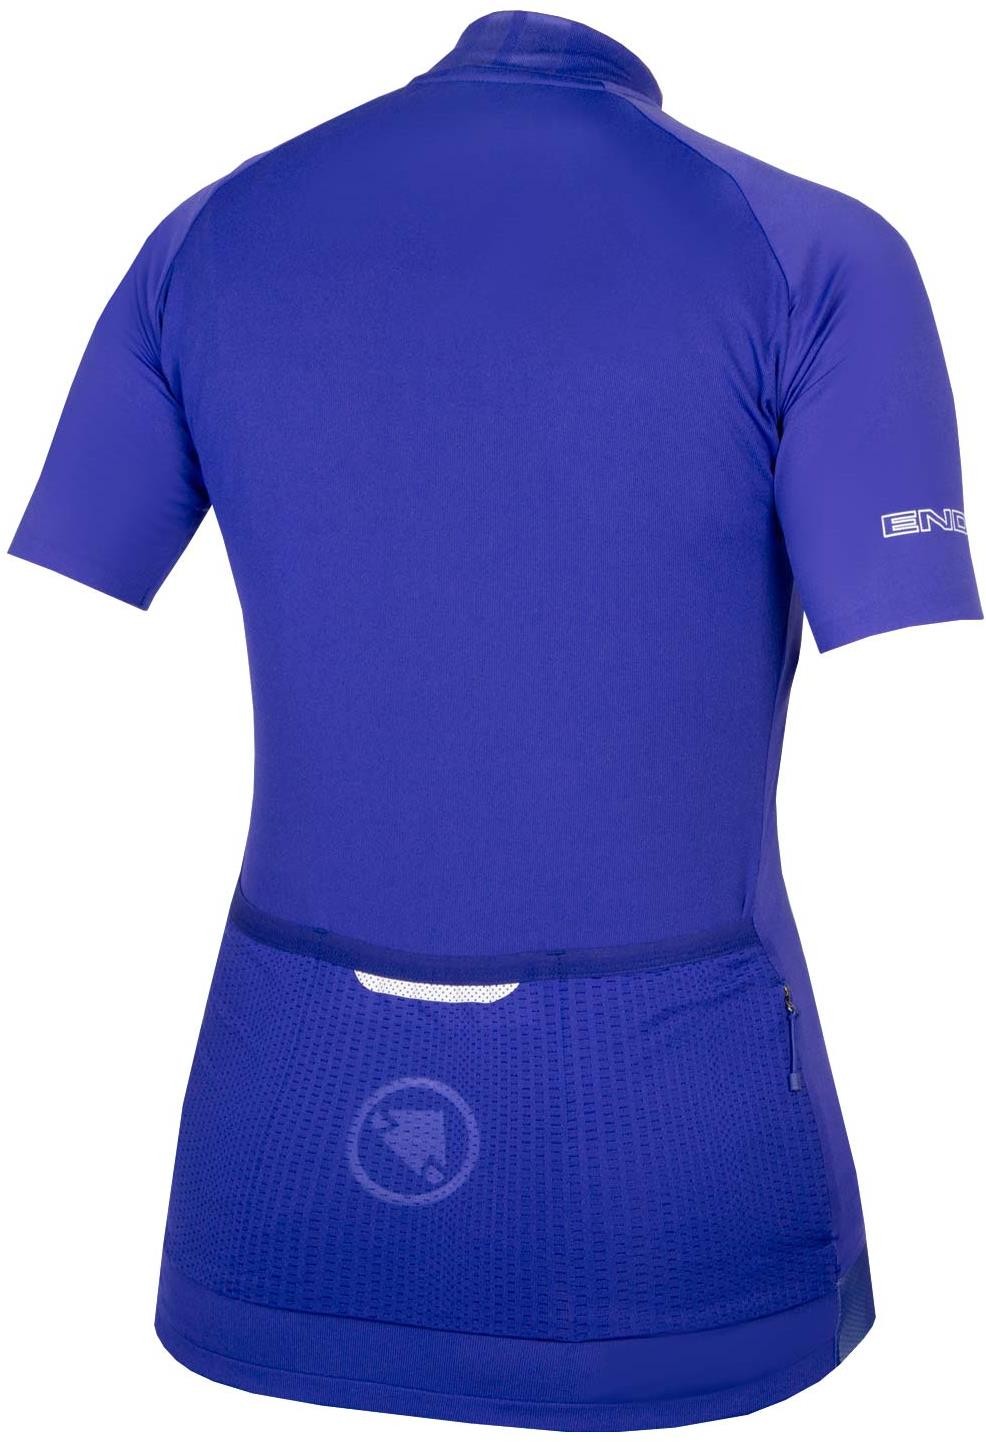 Pro SL Womens Short Sleeve Jersey image 1